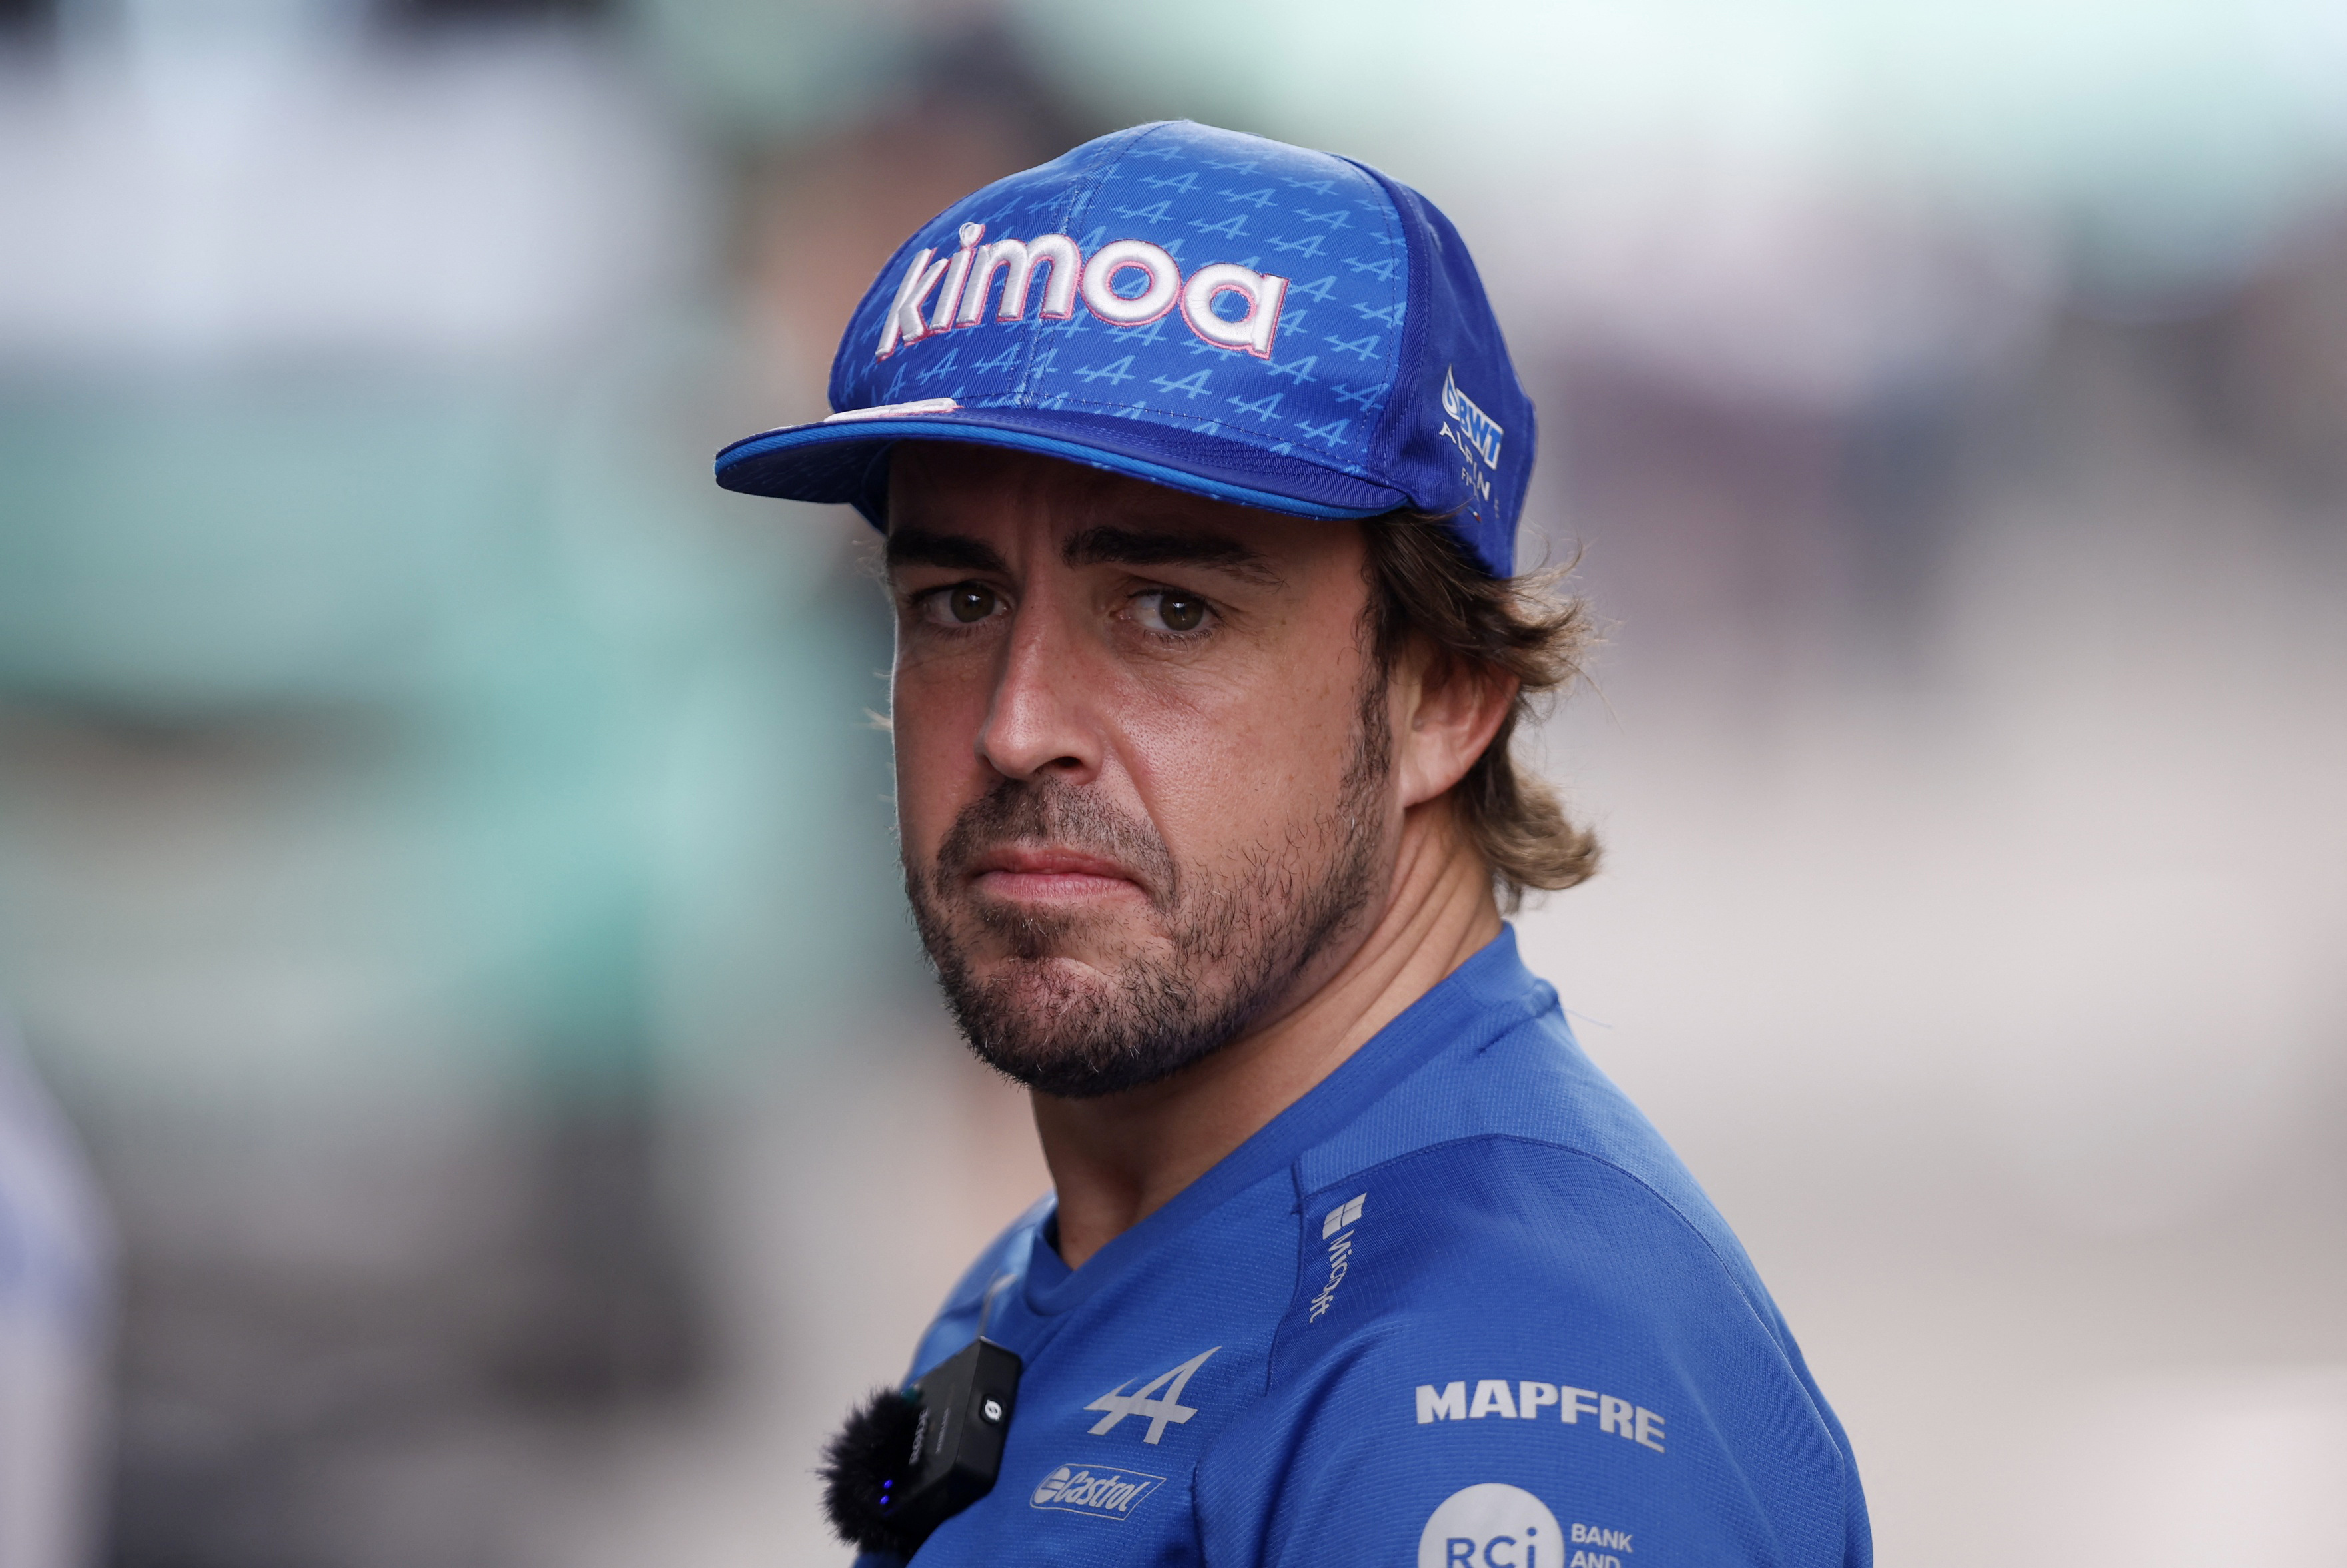 Fernando Alonso Aston Martin F1 GP MEXICO Cap